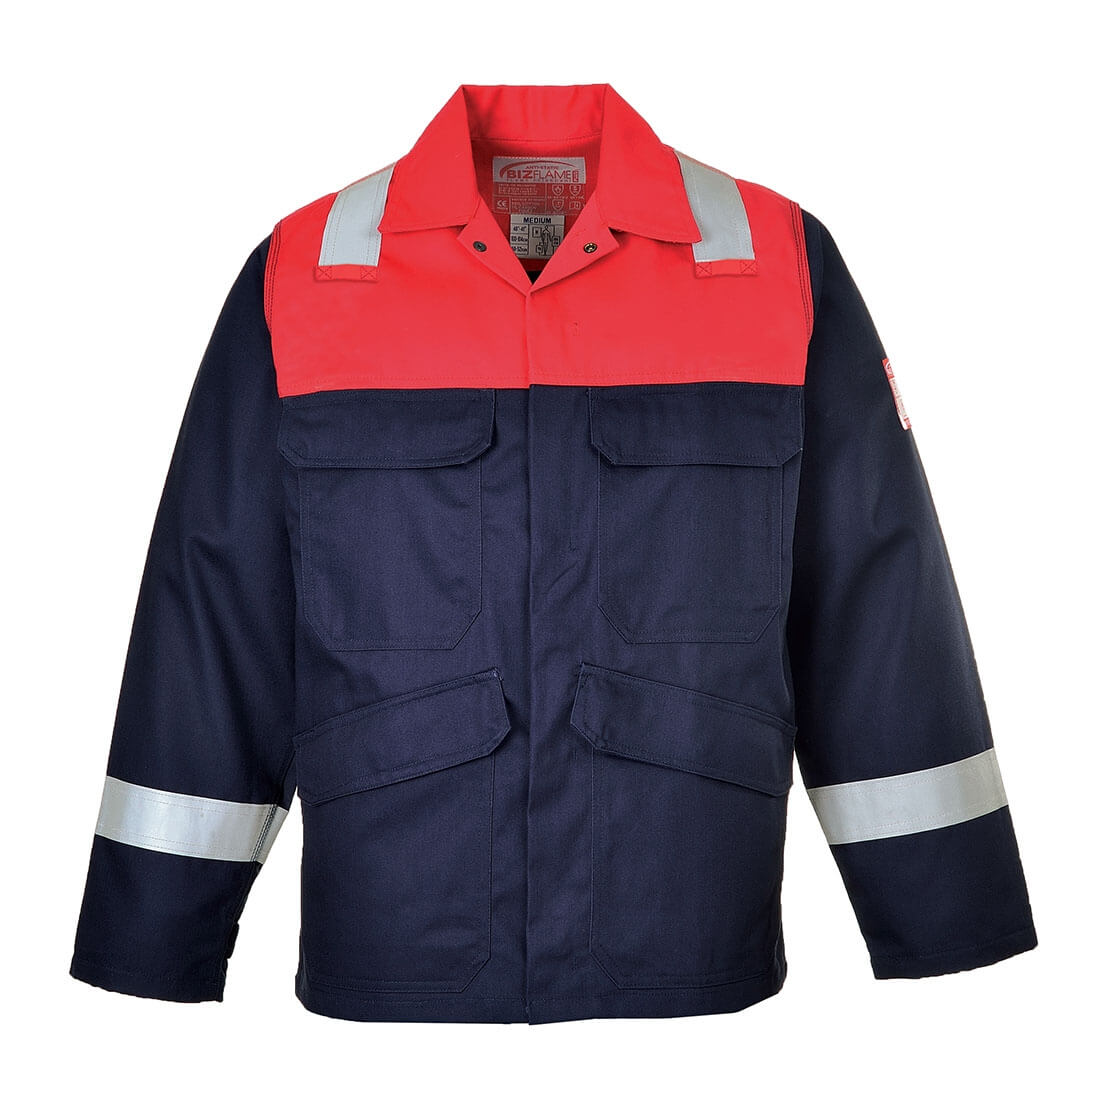 Bizflame Plus Jacket - Safetywear